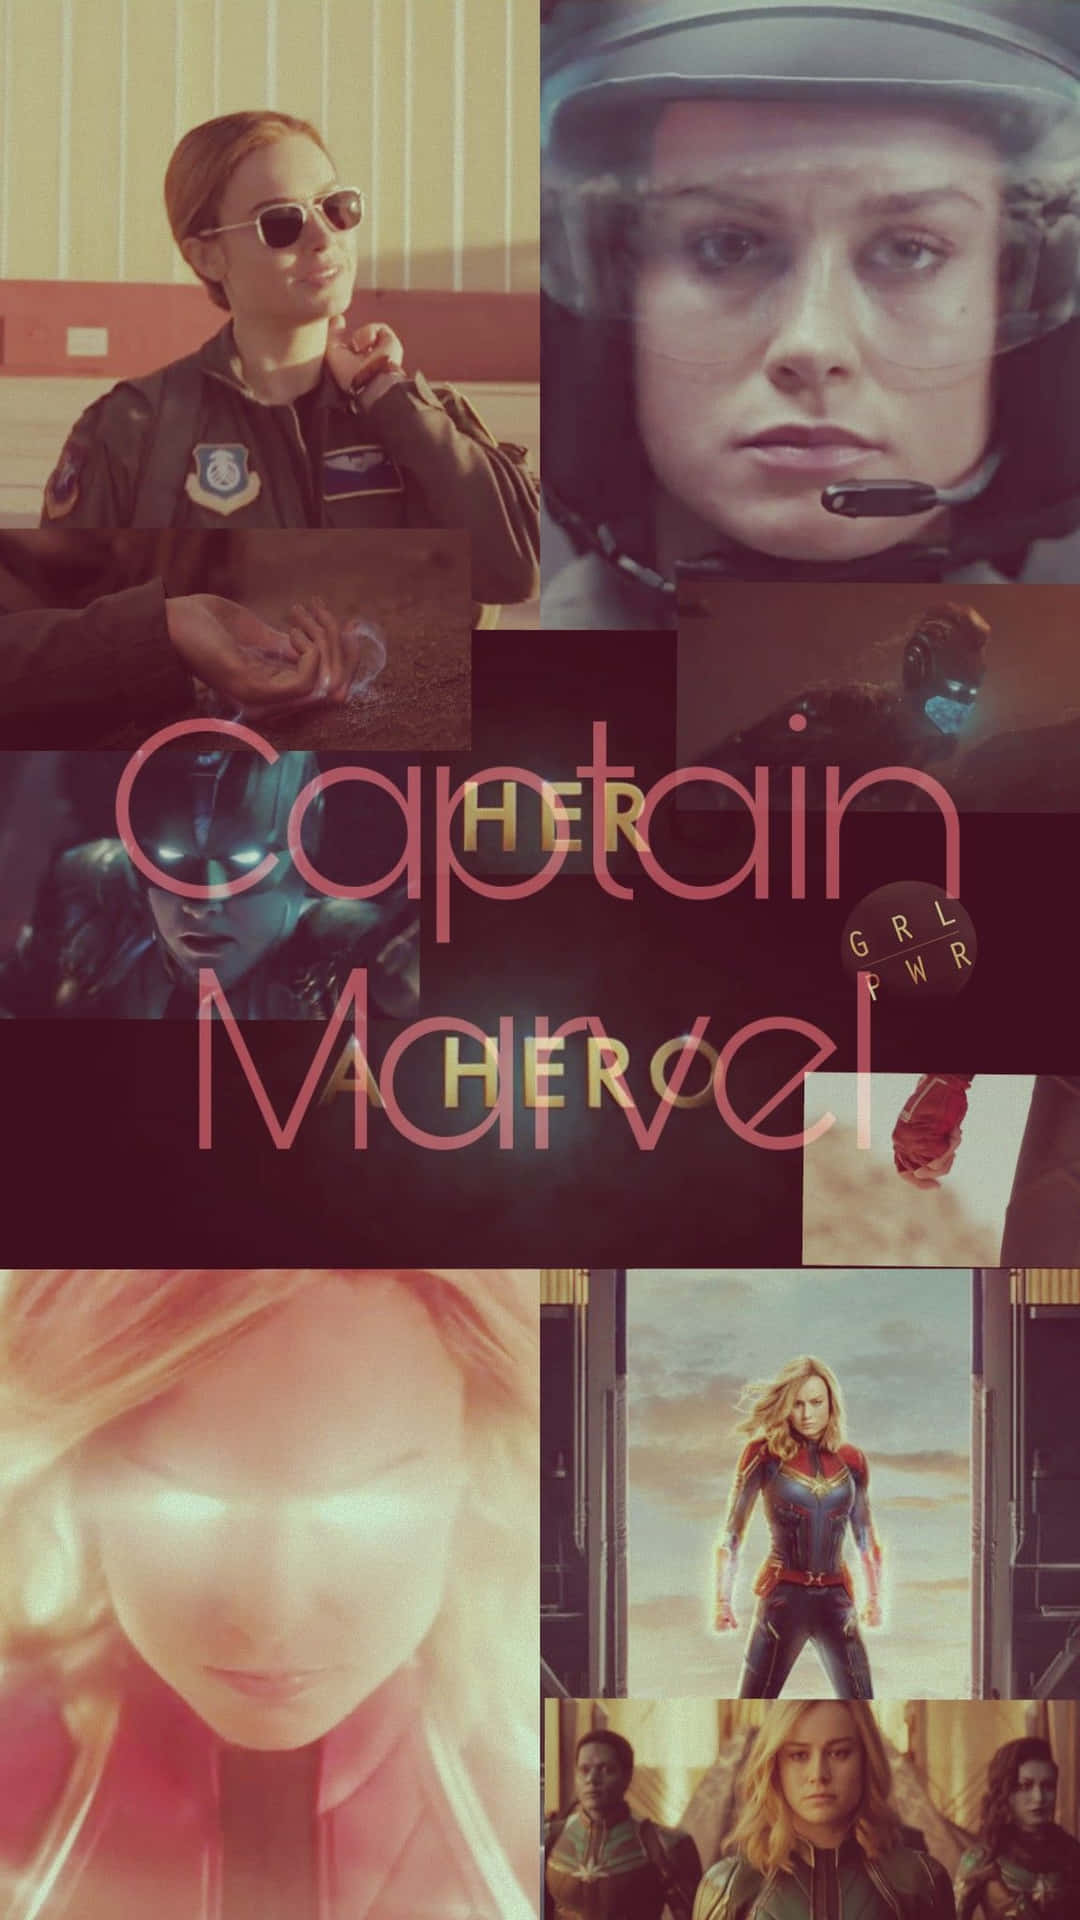 Captain Marvel Carol Danvers Collage Wallpaper